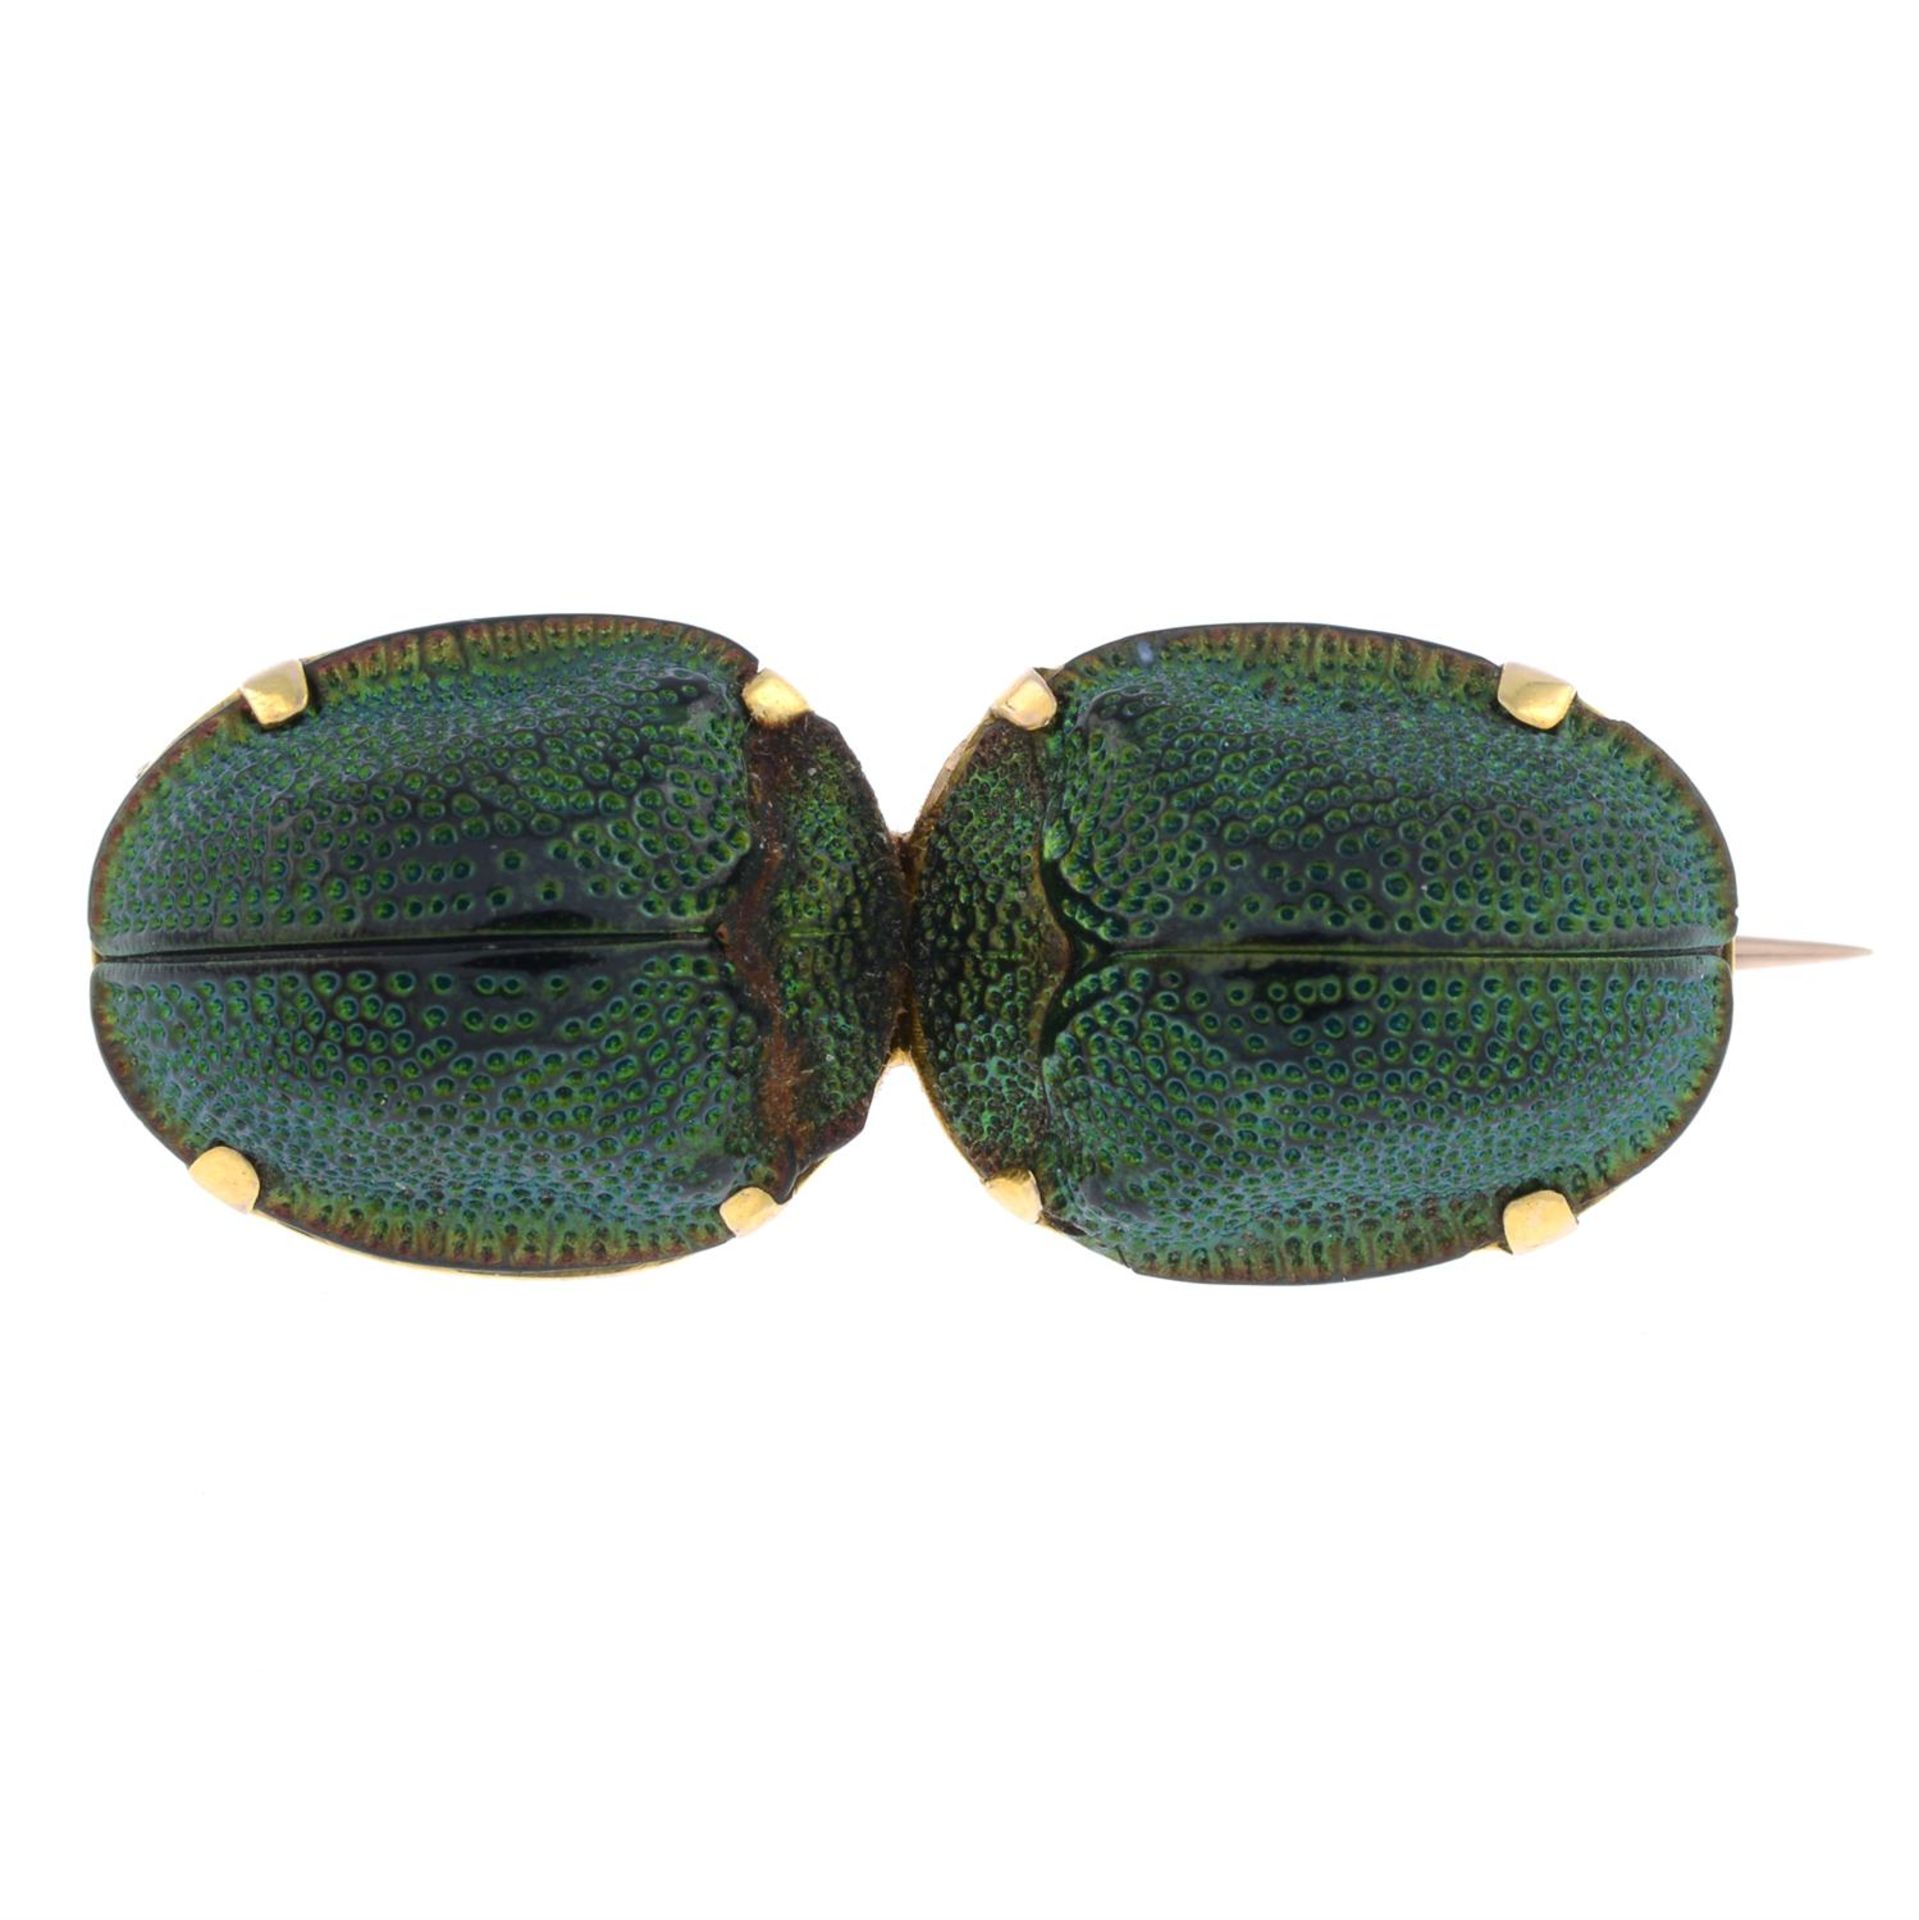 Early 20th century scarab beetle brooch